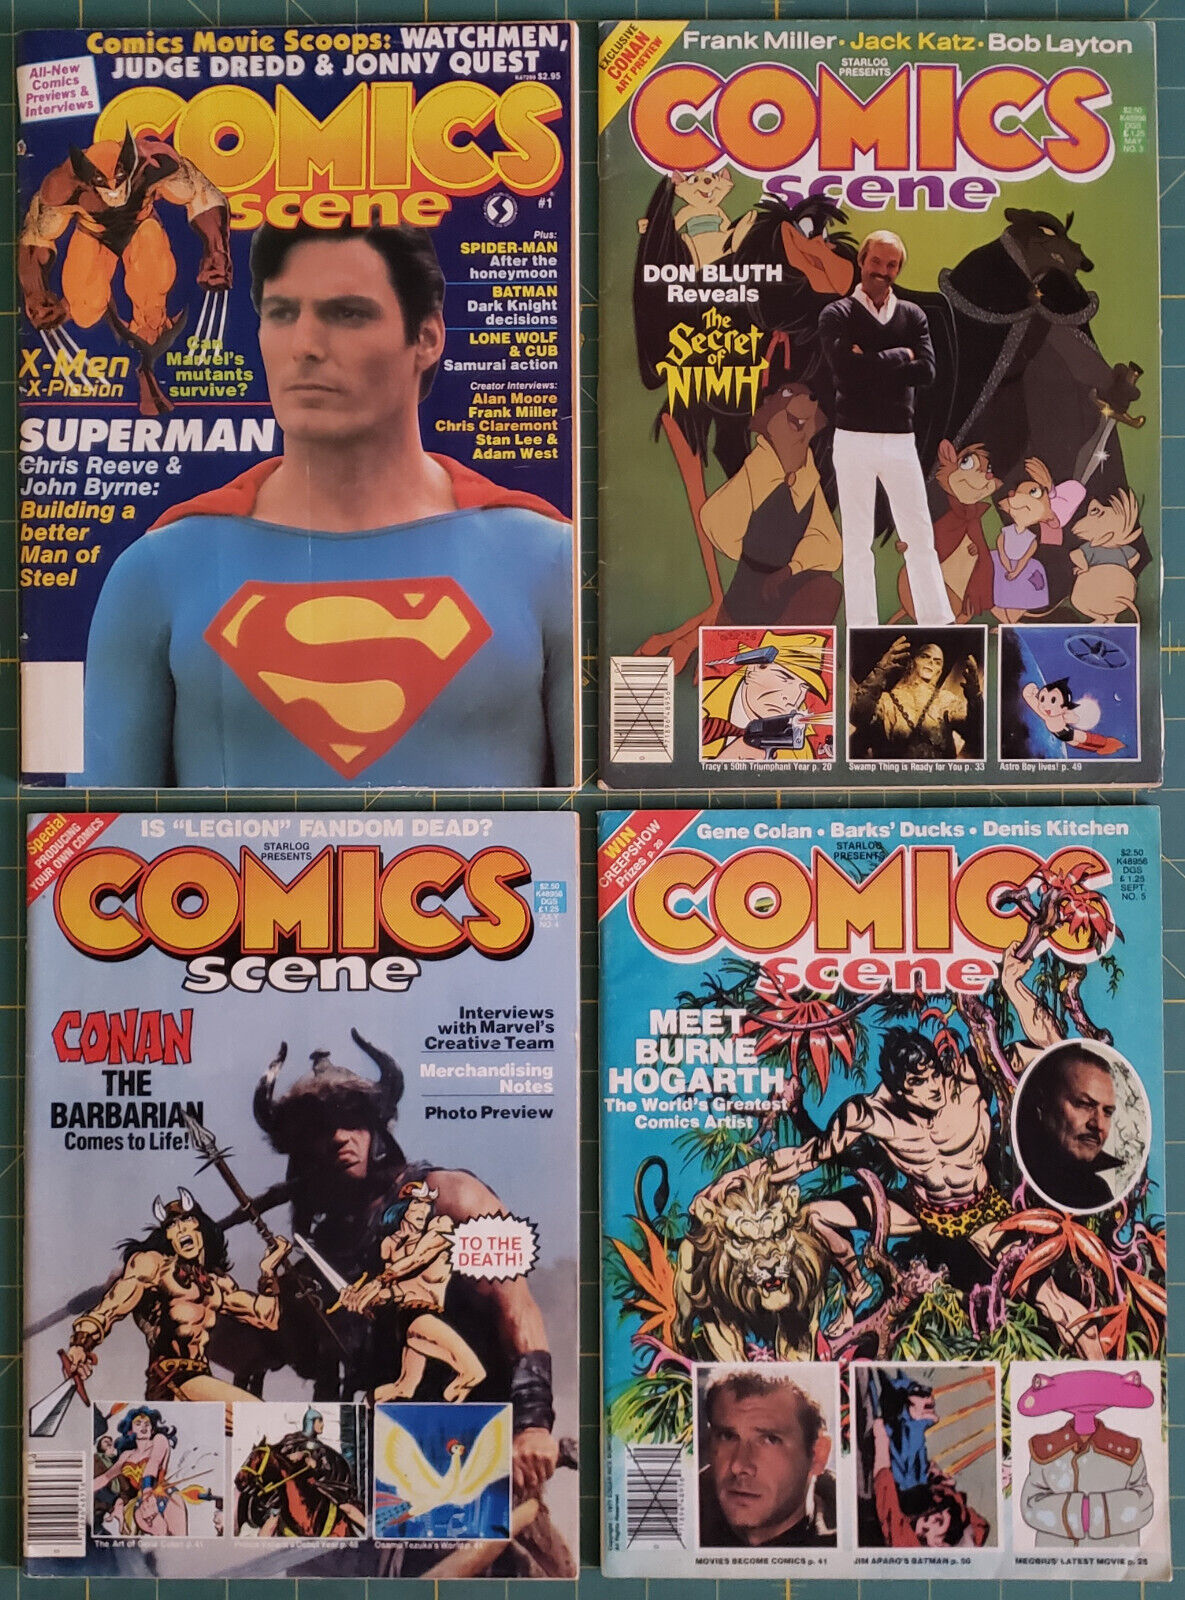 (Lot of 4) COMICS SCENE magazines: Nos. 3, 4, 5 (1982) + No. 1 (1987)